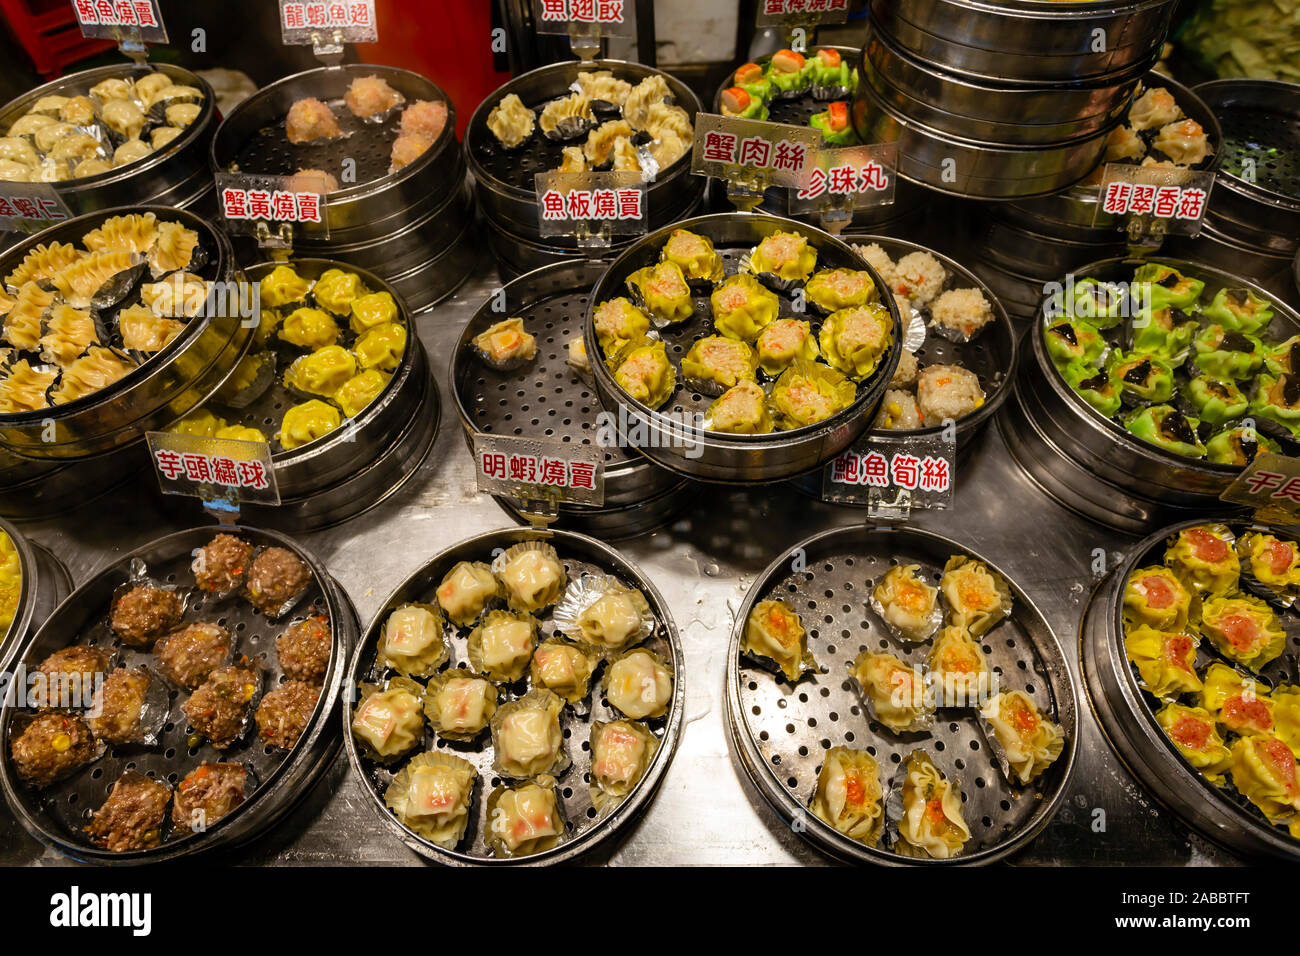 An assortment of Dim Sum dumplings at a street food stall in Zhongli Nigh Market in Taoyuan, Taiwan. Stock Photo